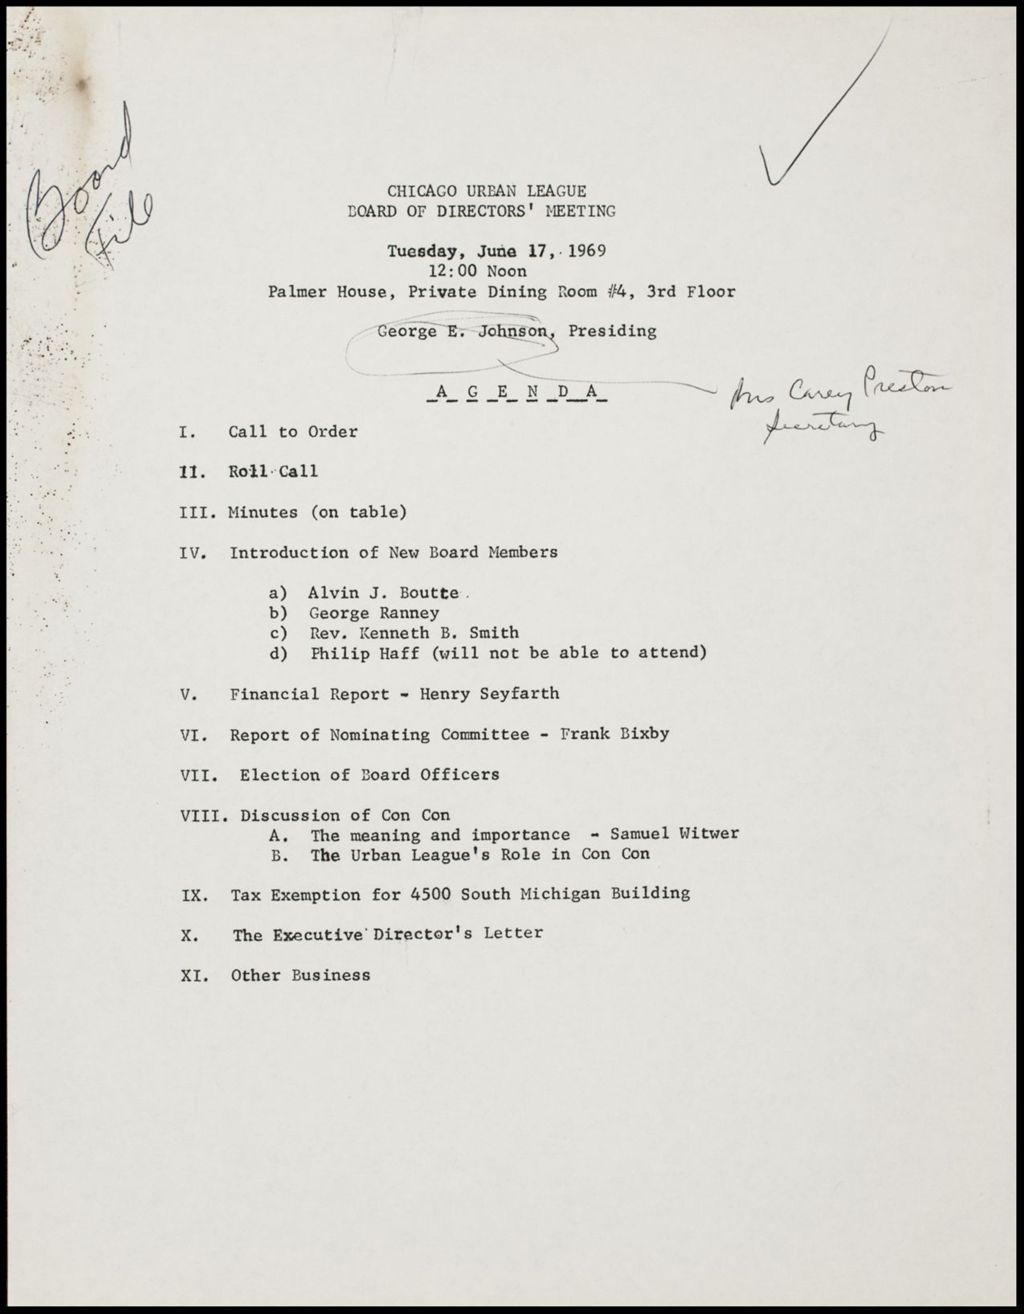 Miniature of Board Meeting - agenda and minutes, 1969 (Folder I-2995)